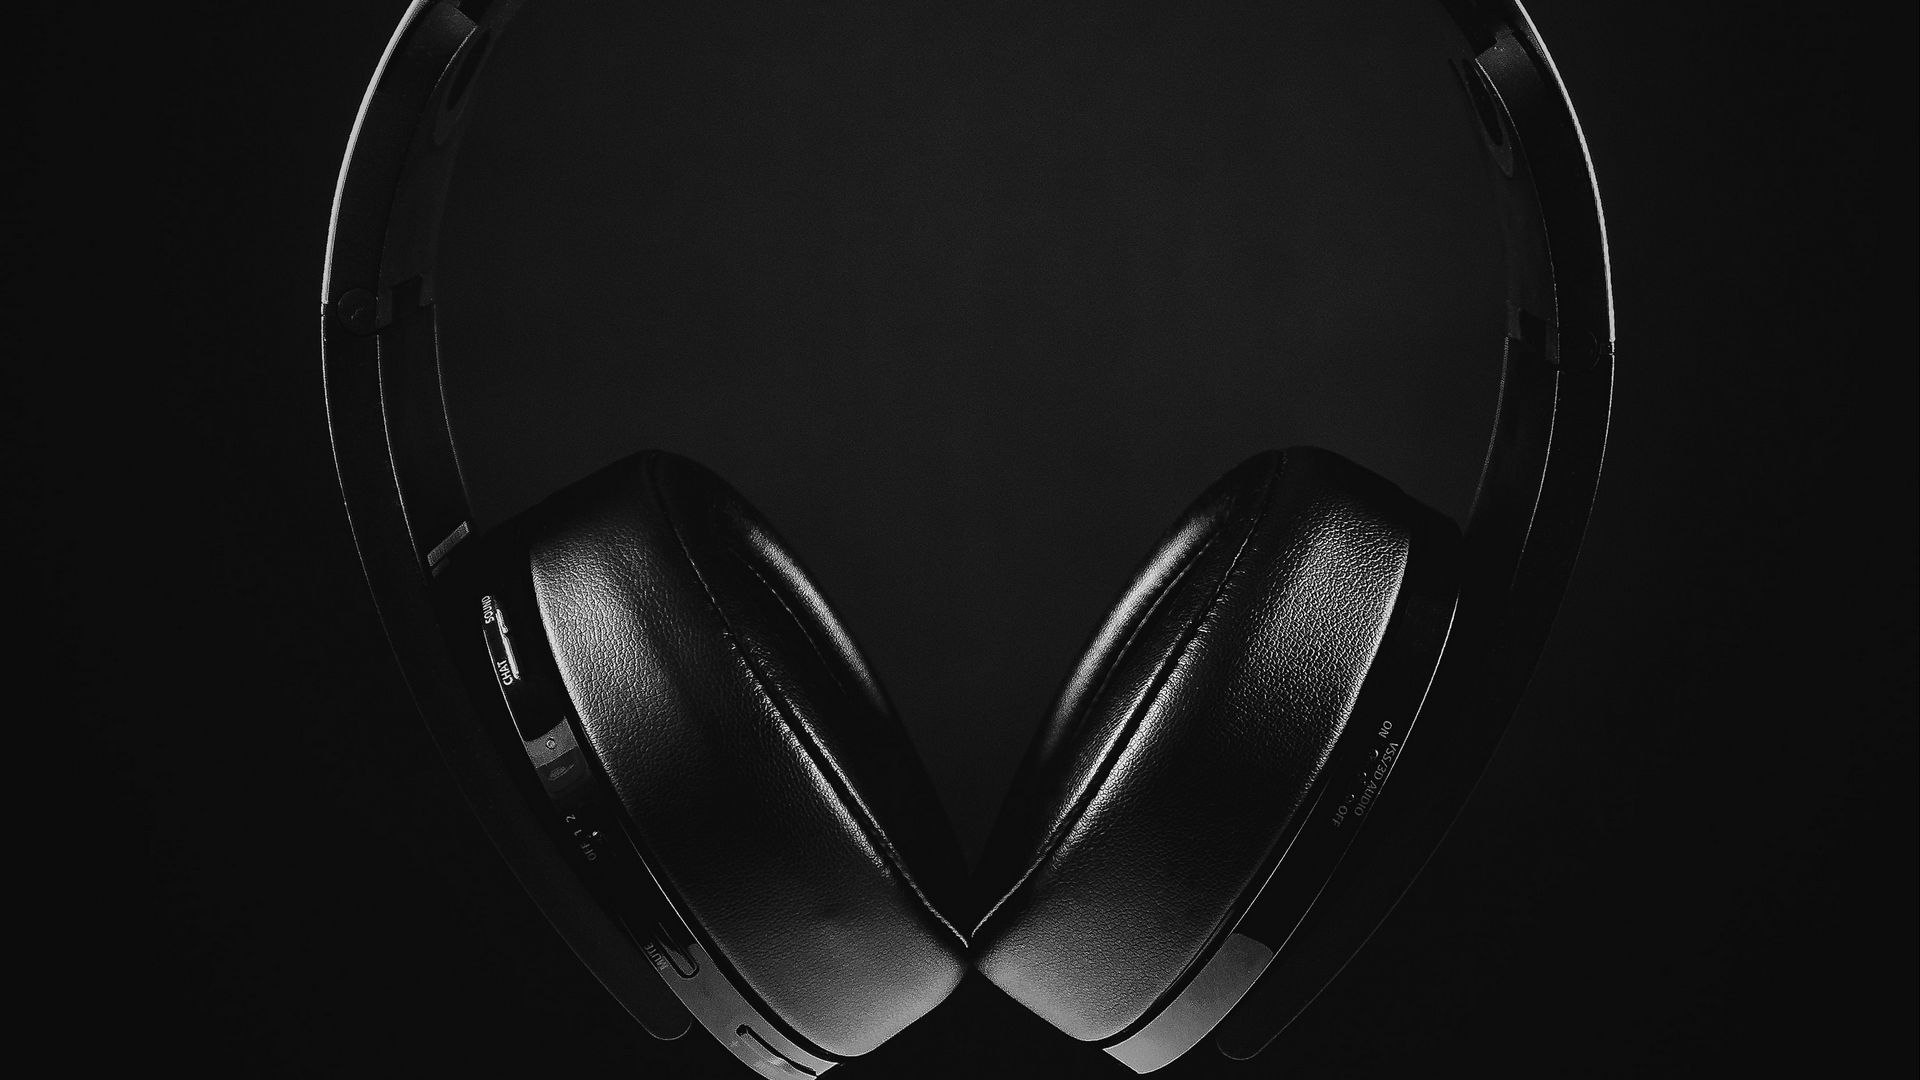 Download wallpaper 1920x1080 headphones, black, technology full hd, hdtv, fhd, 1080p HD background